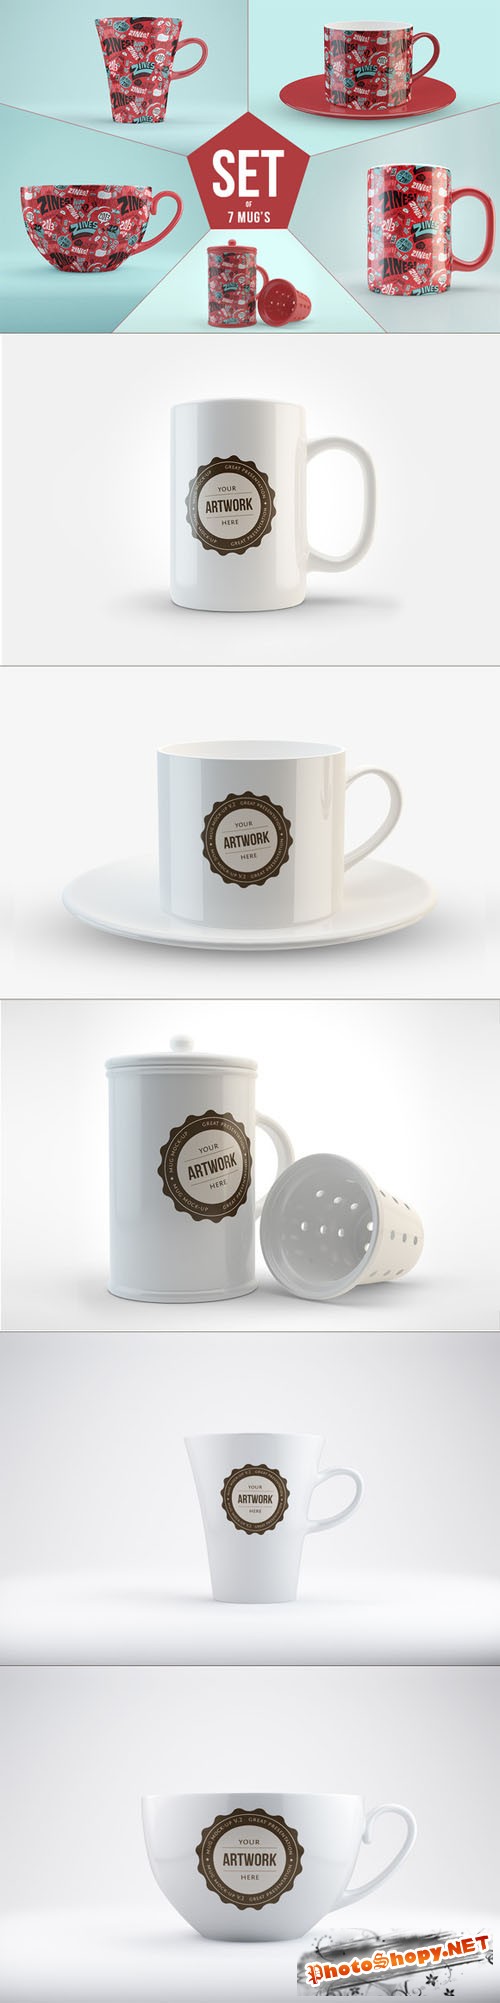 CreativeMarket - Mug Mock-Ups Set